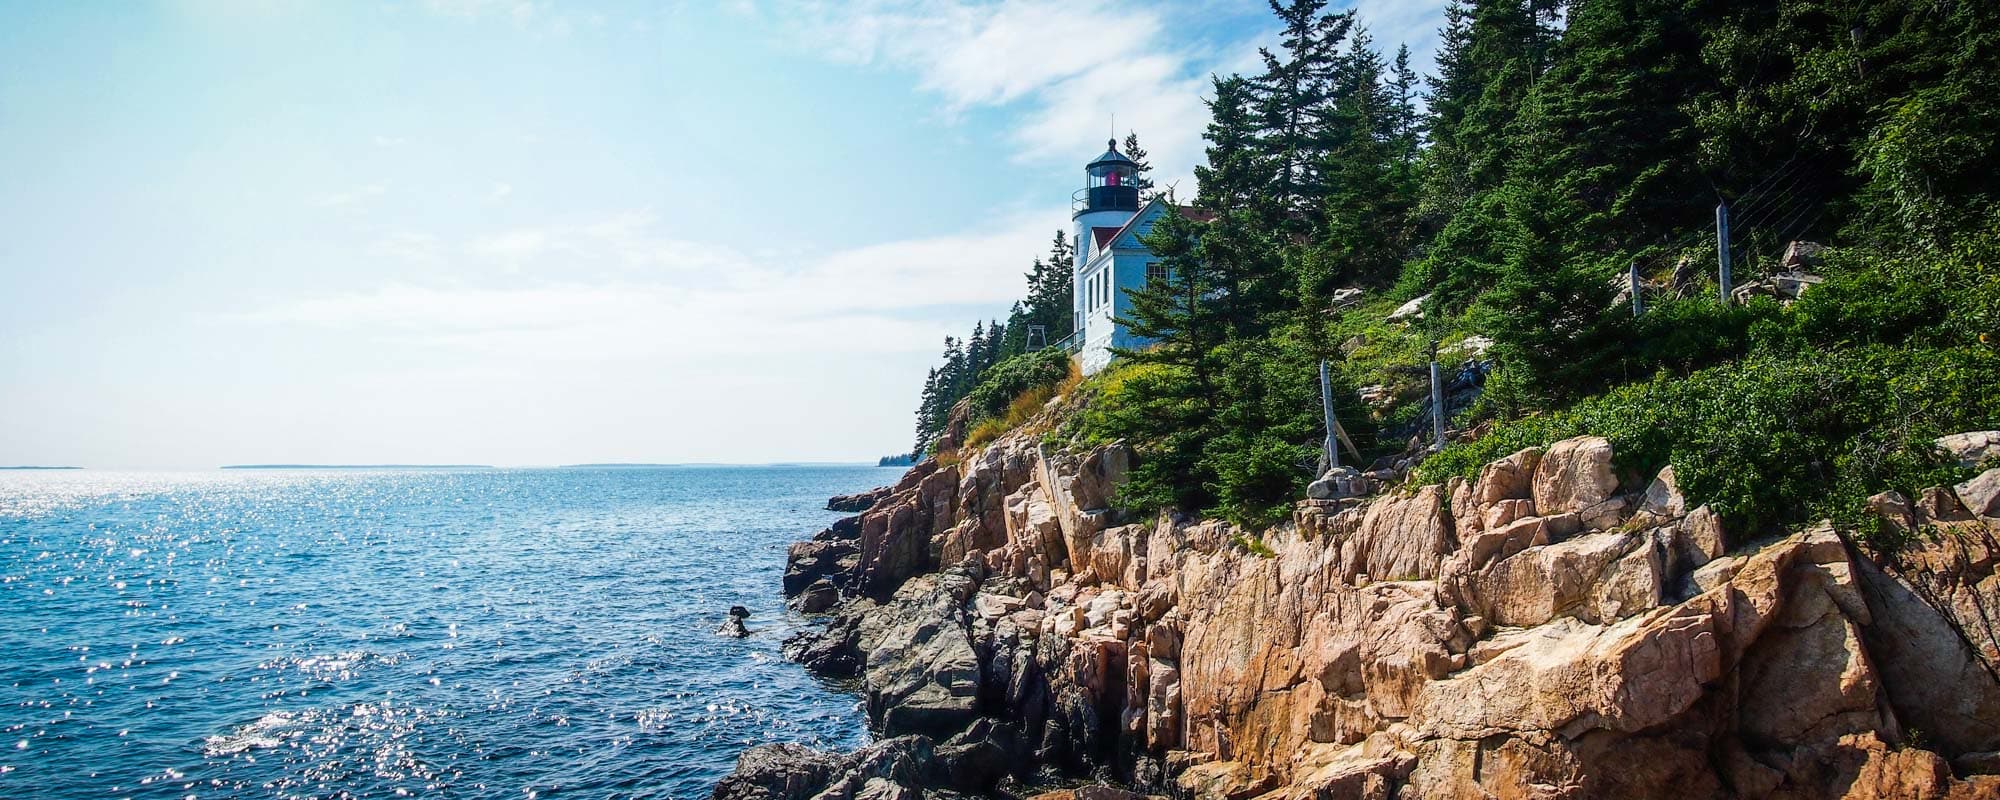 Acadia National Park, Maine - Banner Lighthouse